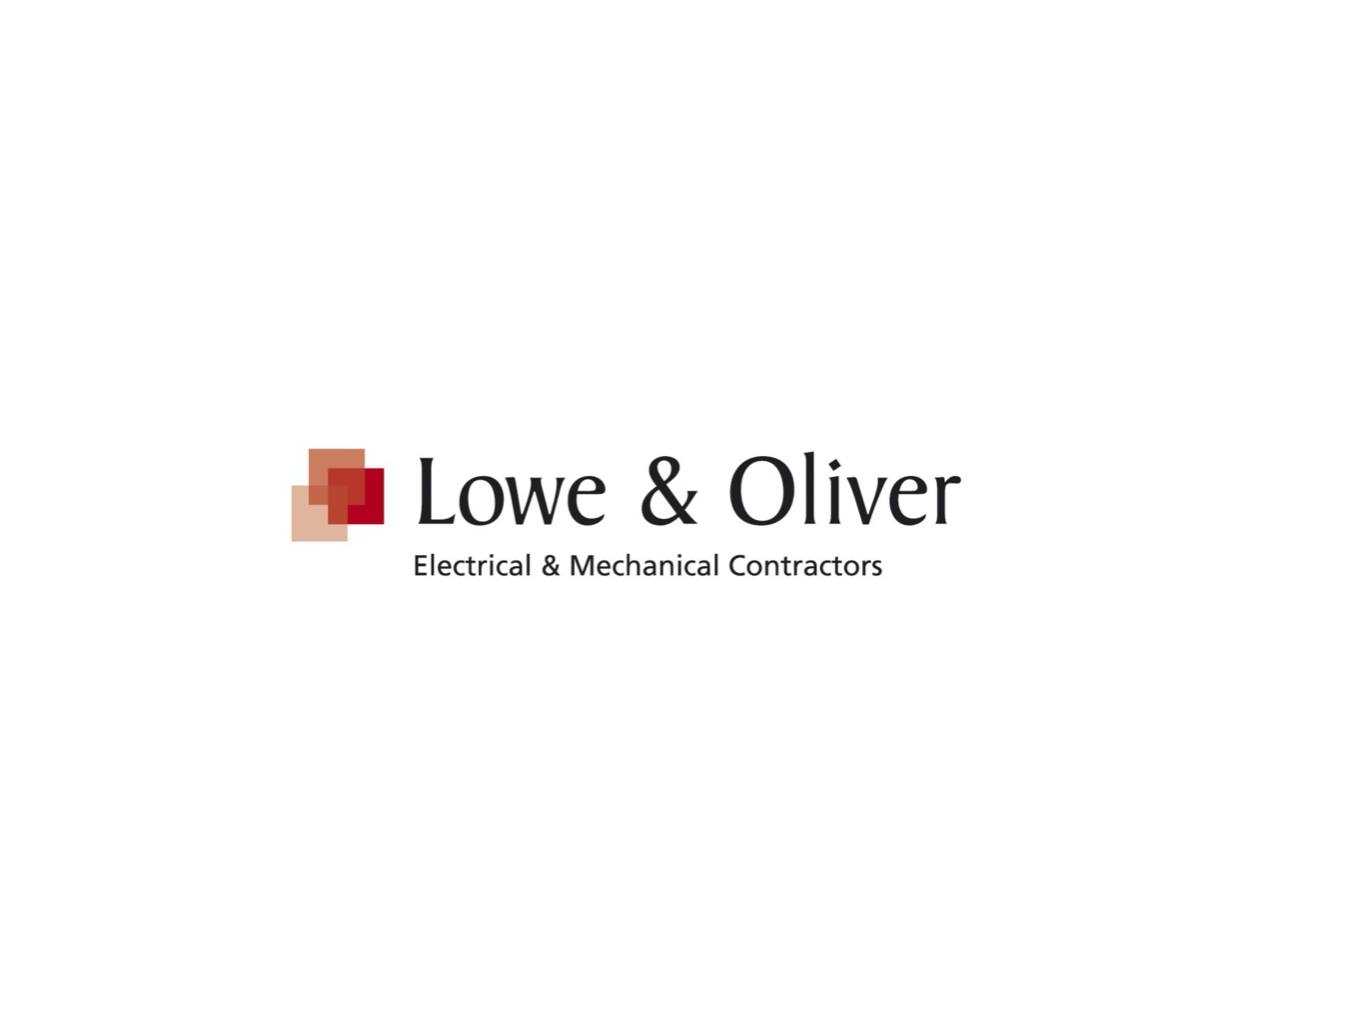 Lowe & Oliver Ltd